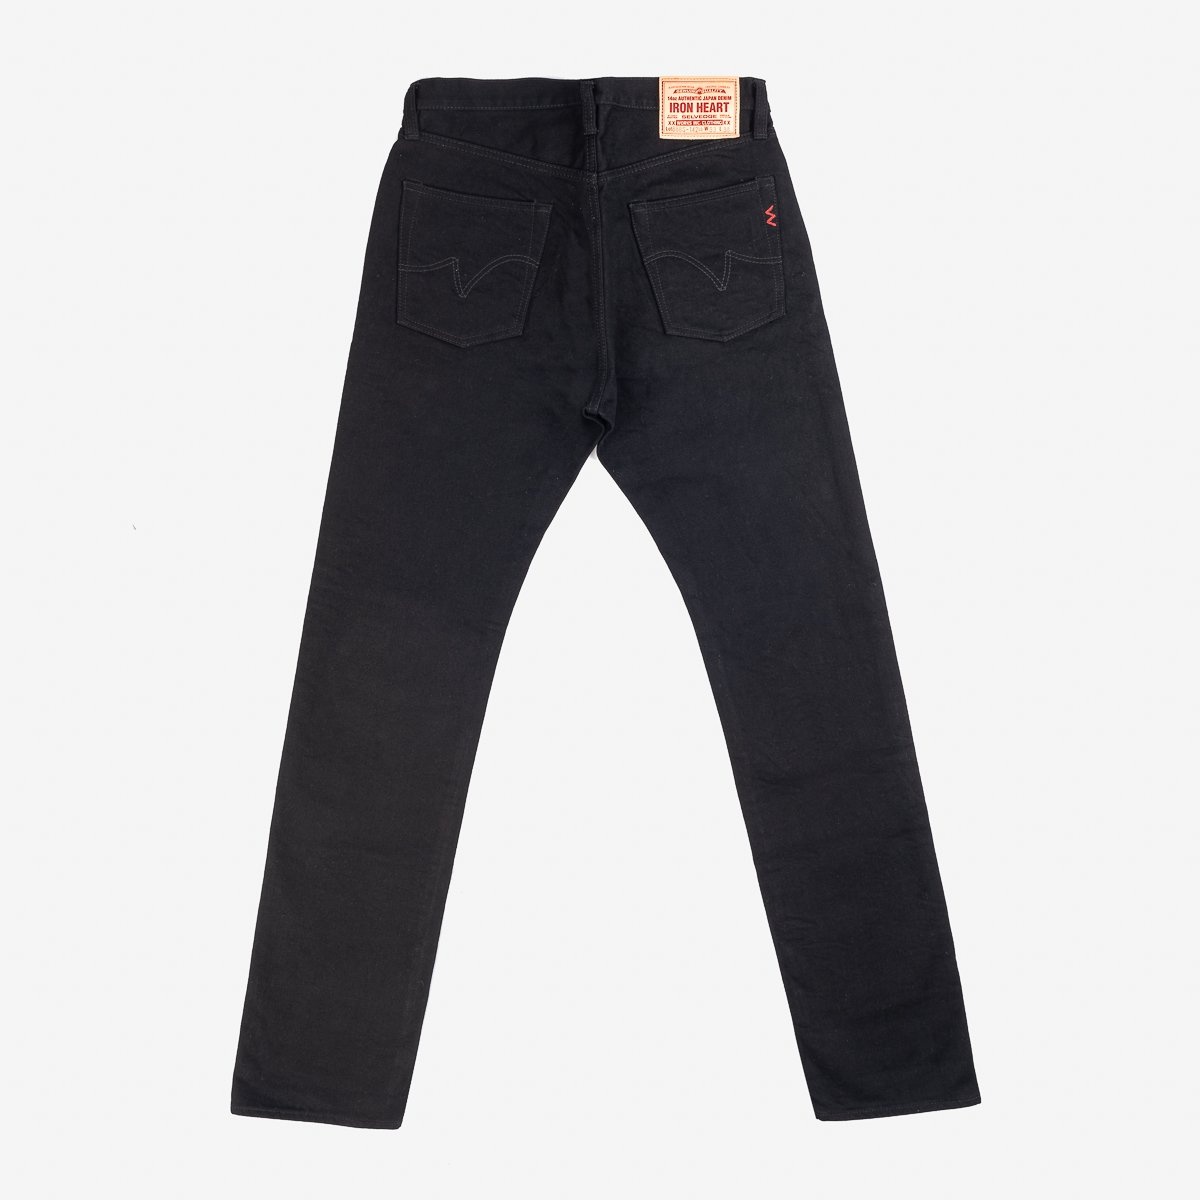 IH-888S-142bb 14oz Selvedge Denim Medium/High Rise Tapered Cut Jeans - Black/Black - 5